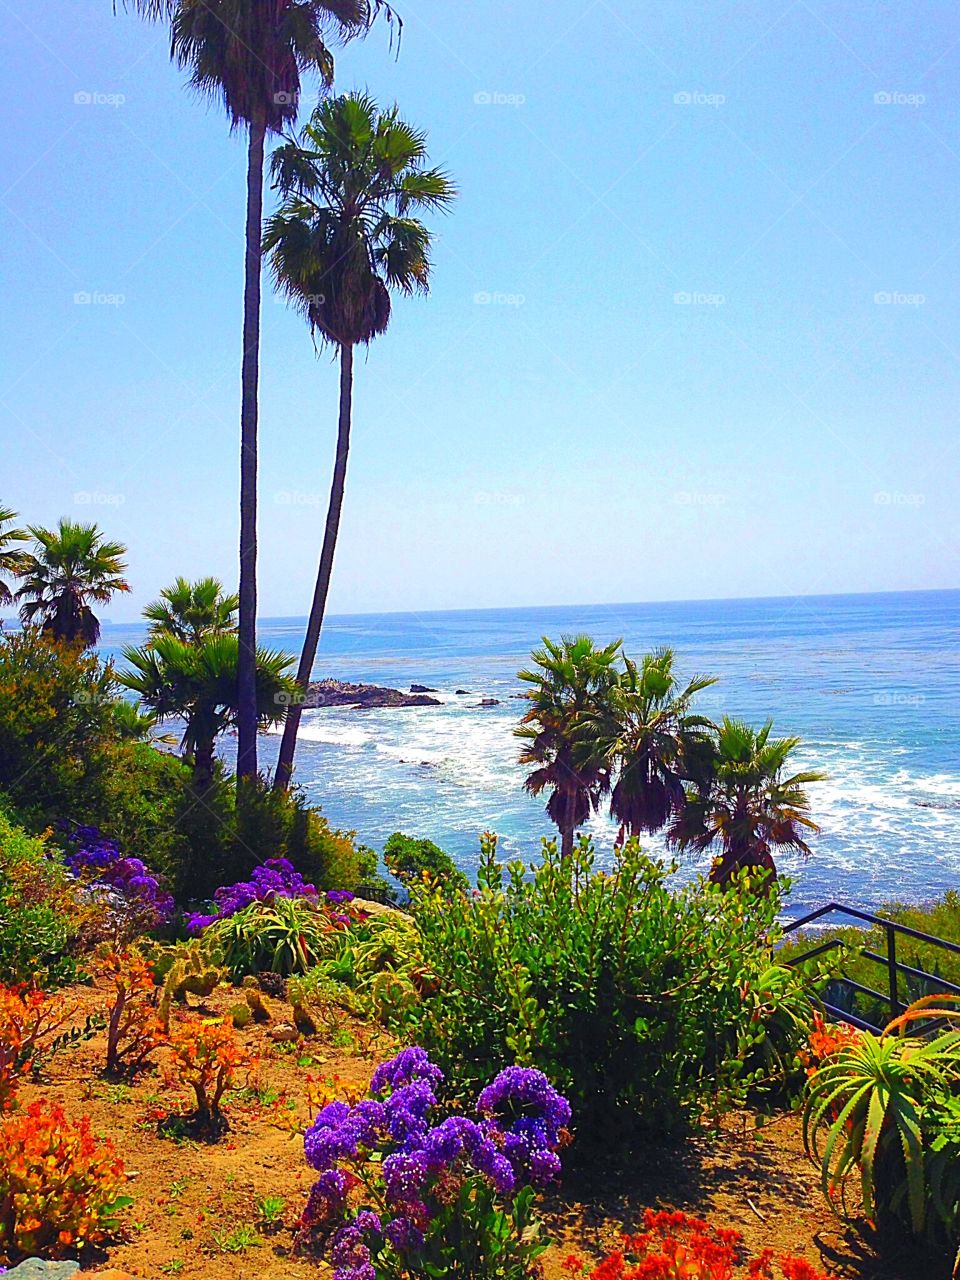 California’s beautiful coastline. 